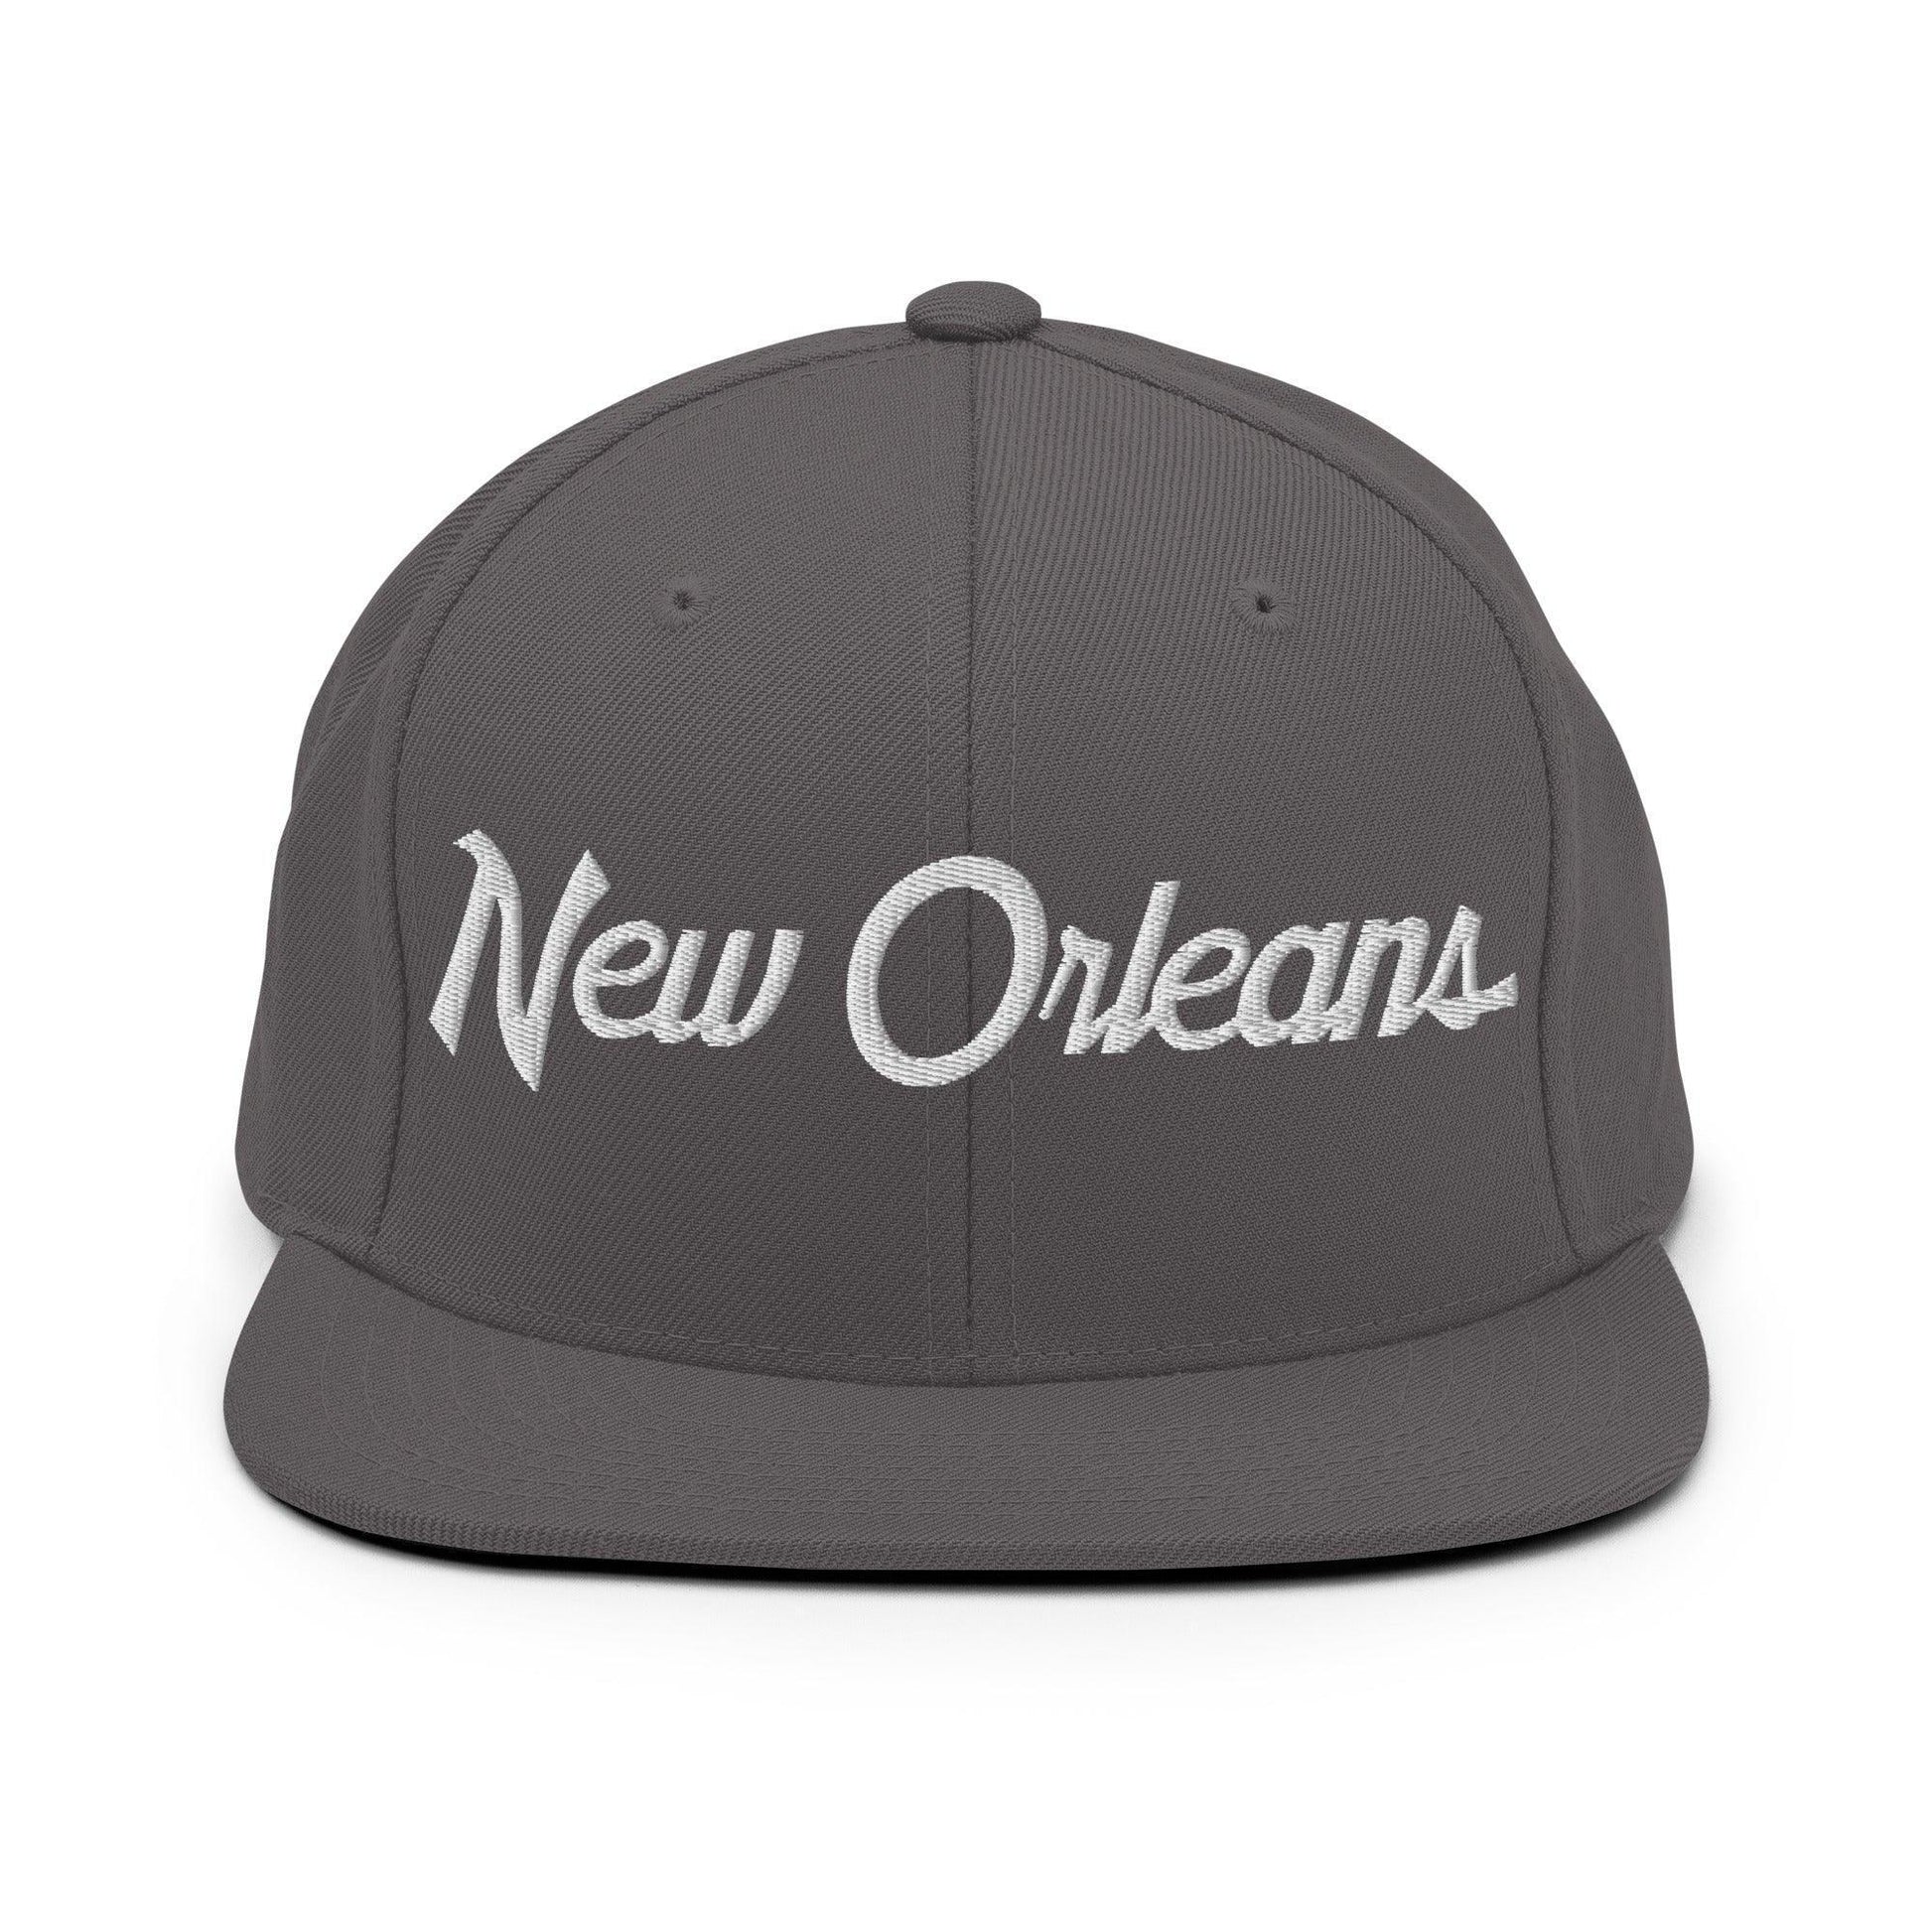 New Orleans Script Snapback Hat Dark Grey